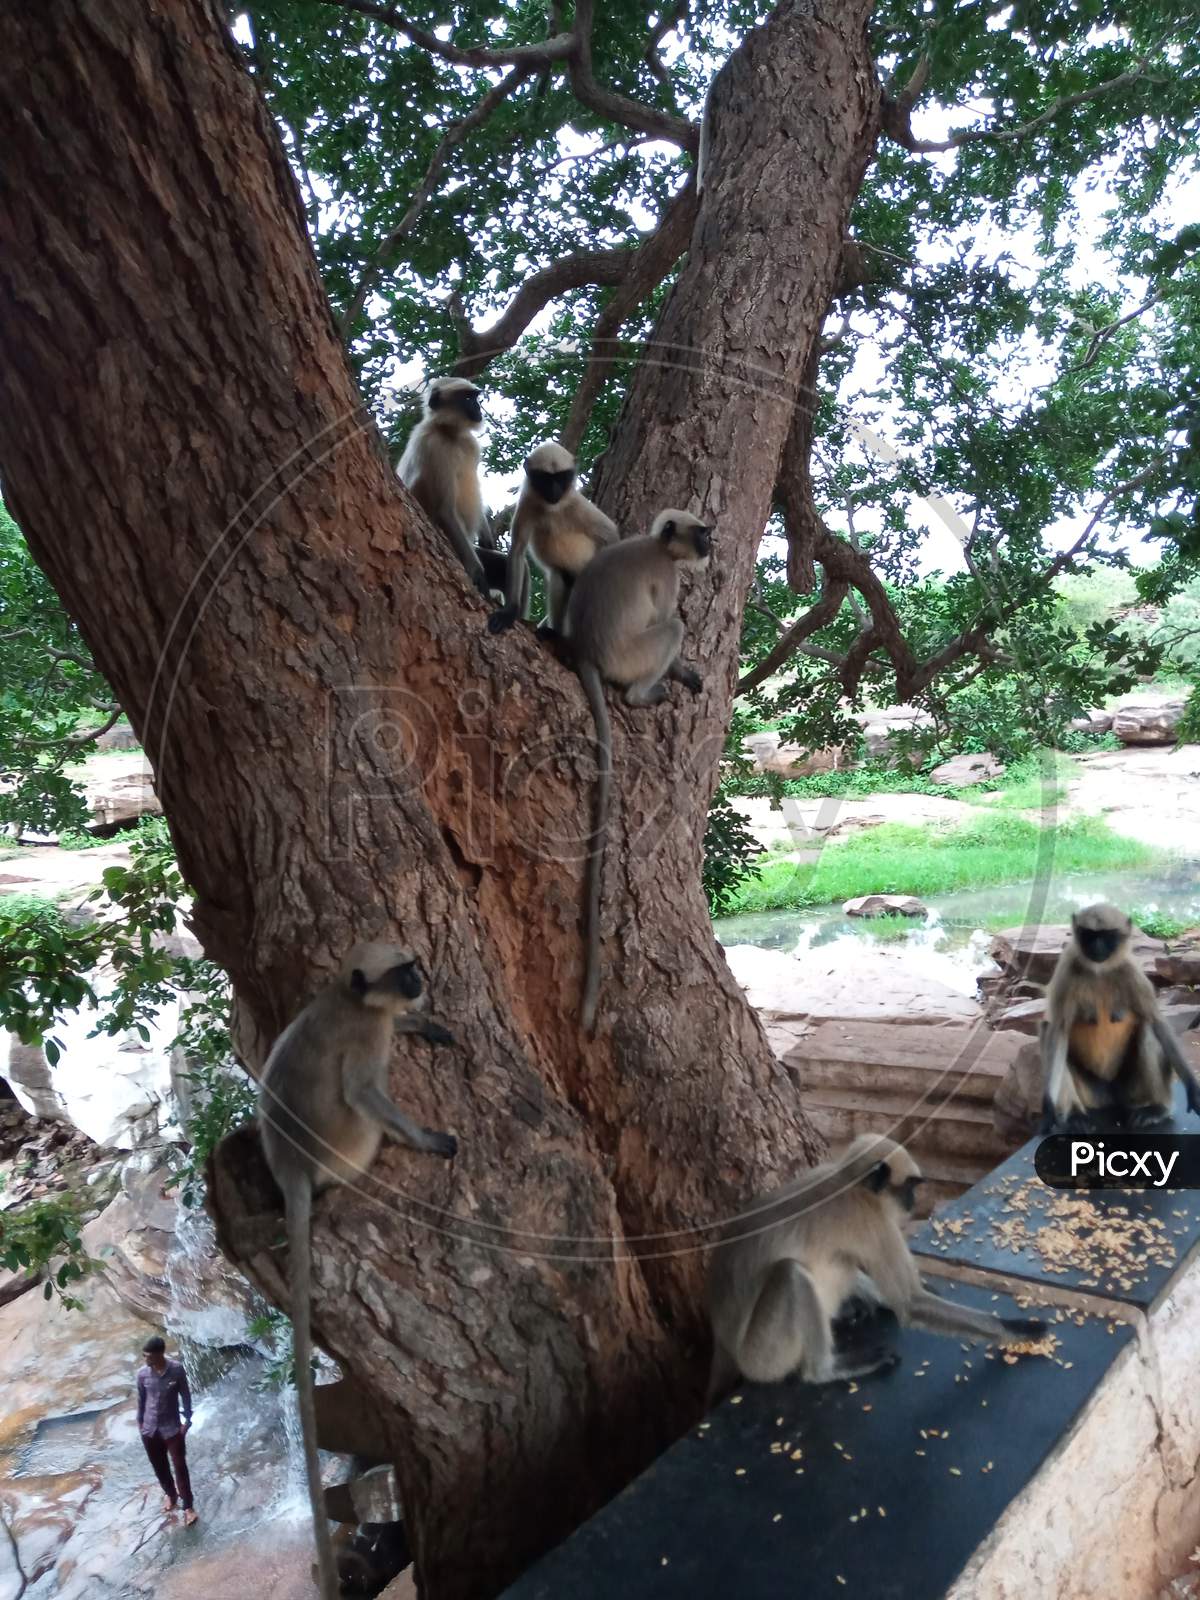 Monkey Sit In The Tree In Temple